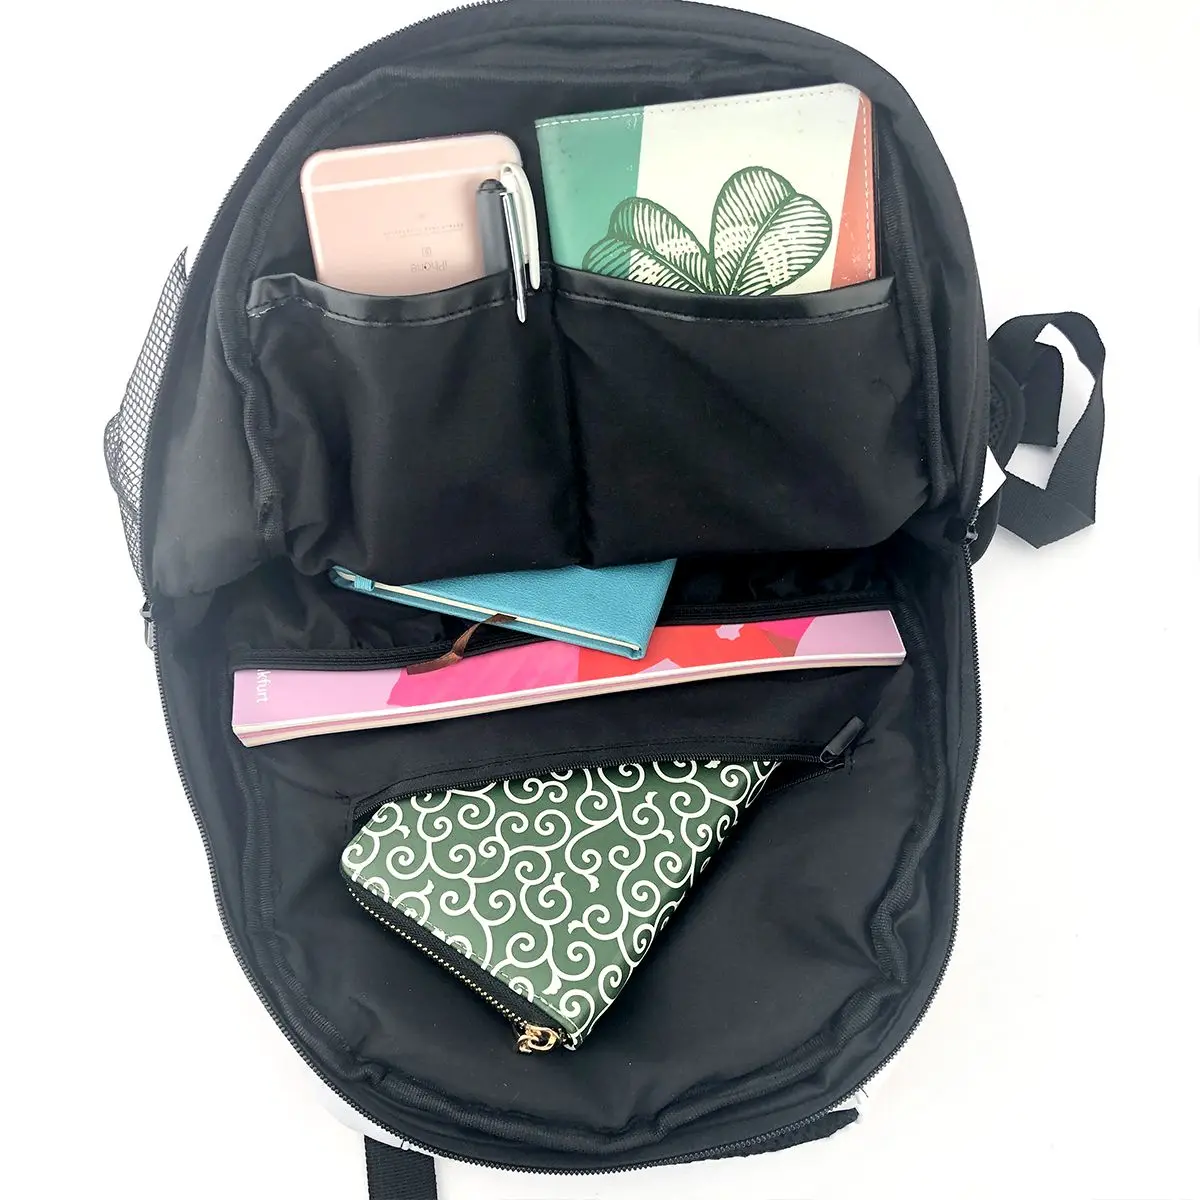 

2020 OLN New Style Backpack Boy Teenagers Nursery School bag Rising Rooster Patterns back to school bag